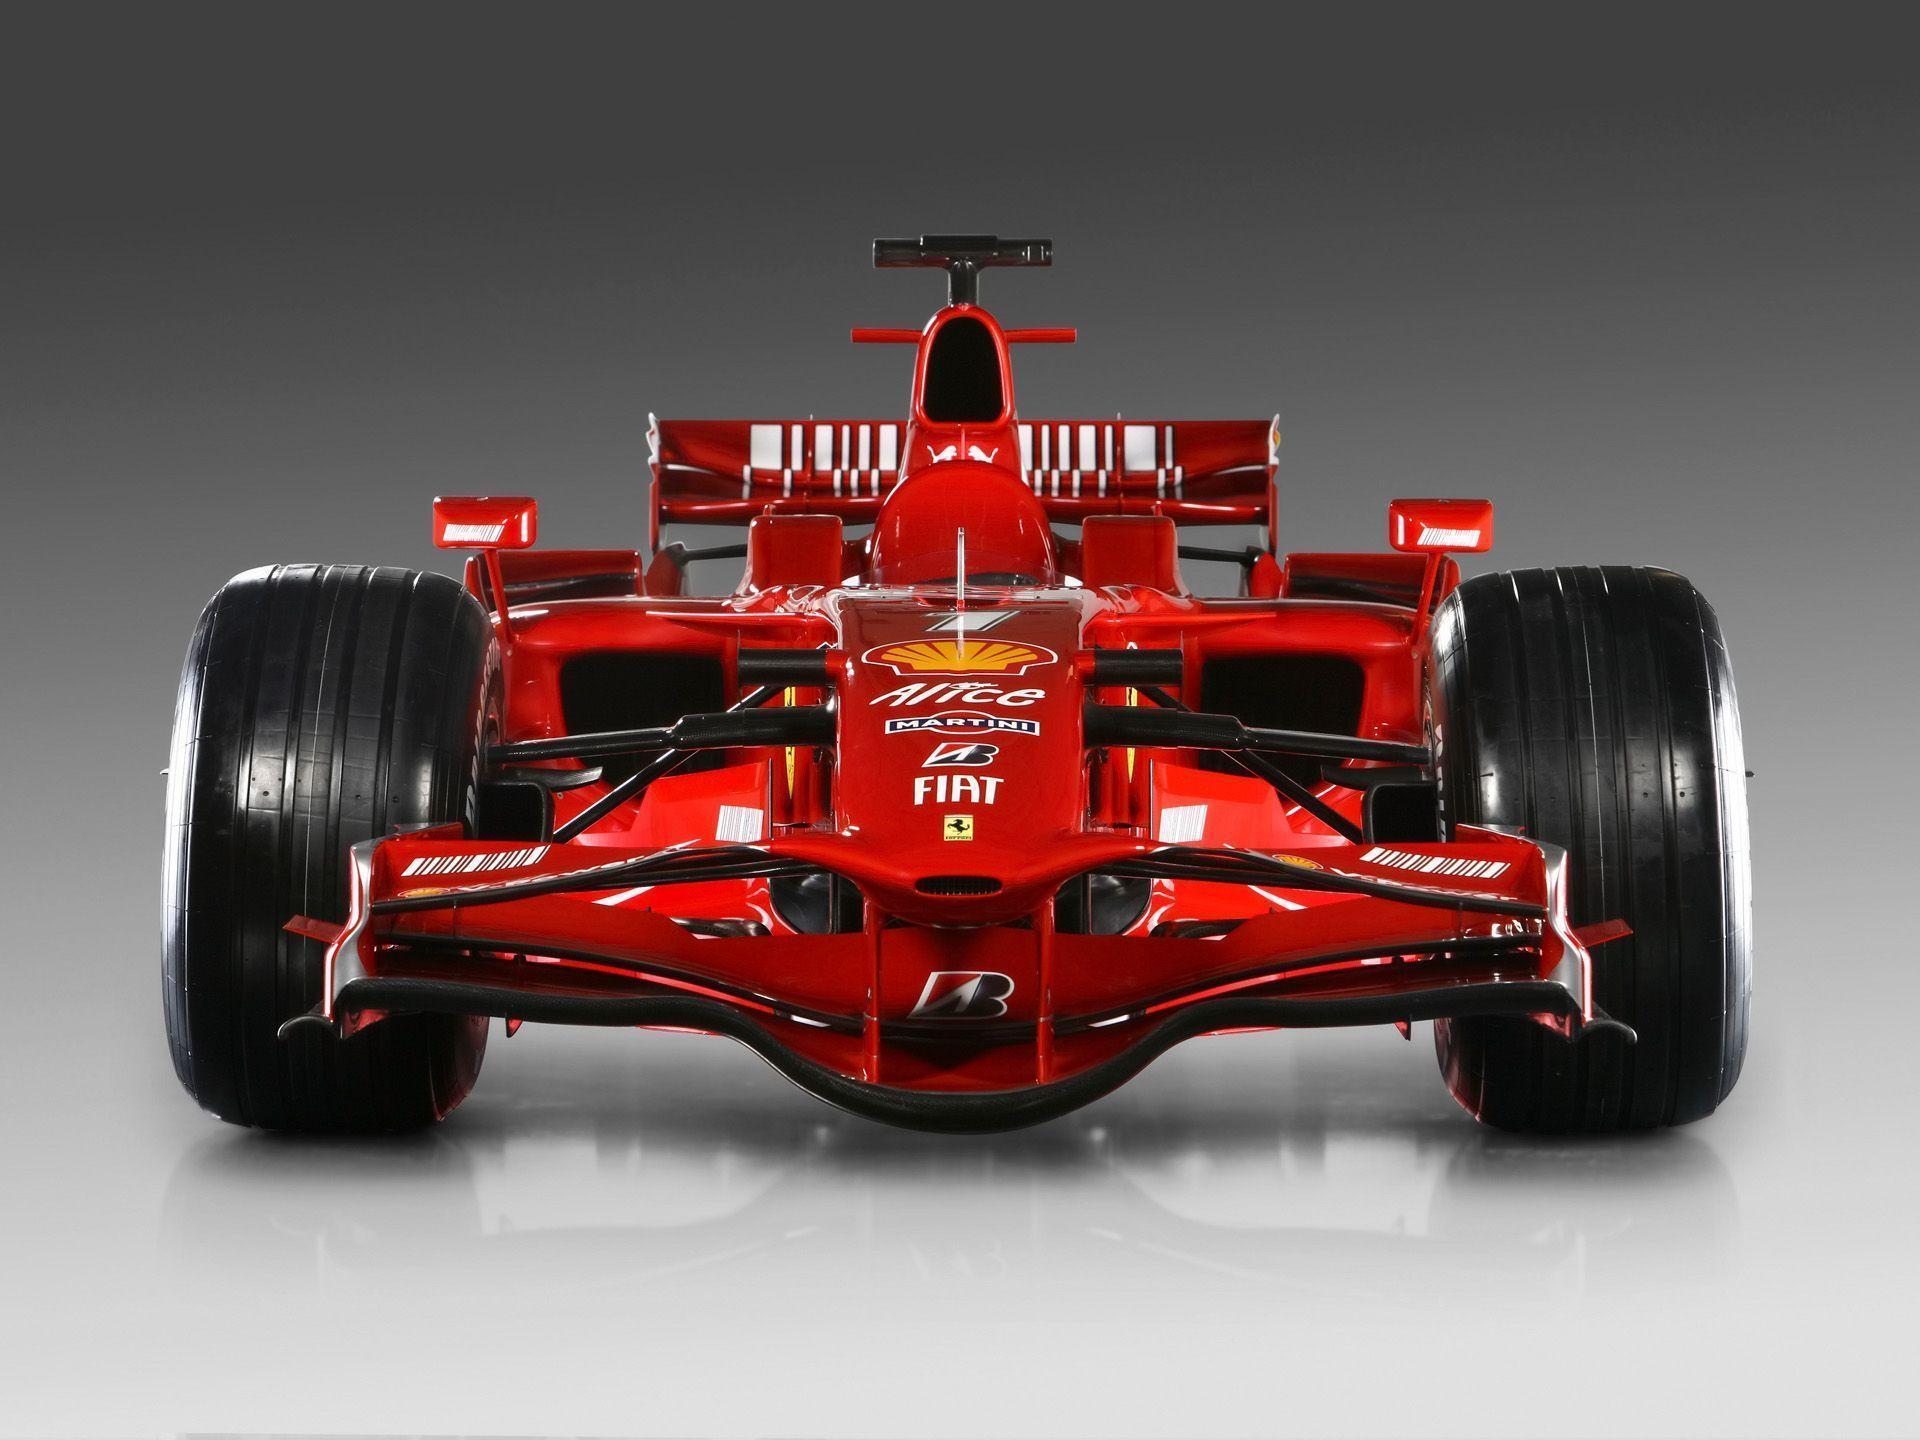 Ferrari F1 Wallpaper Image Site, Car Image Site